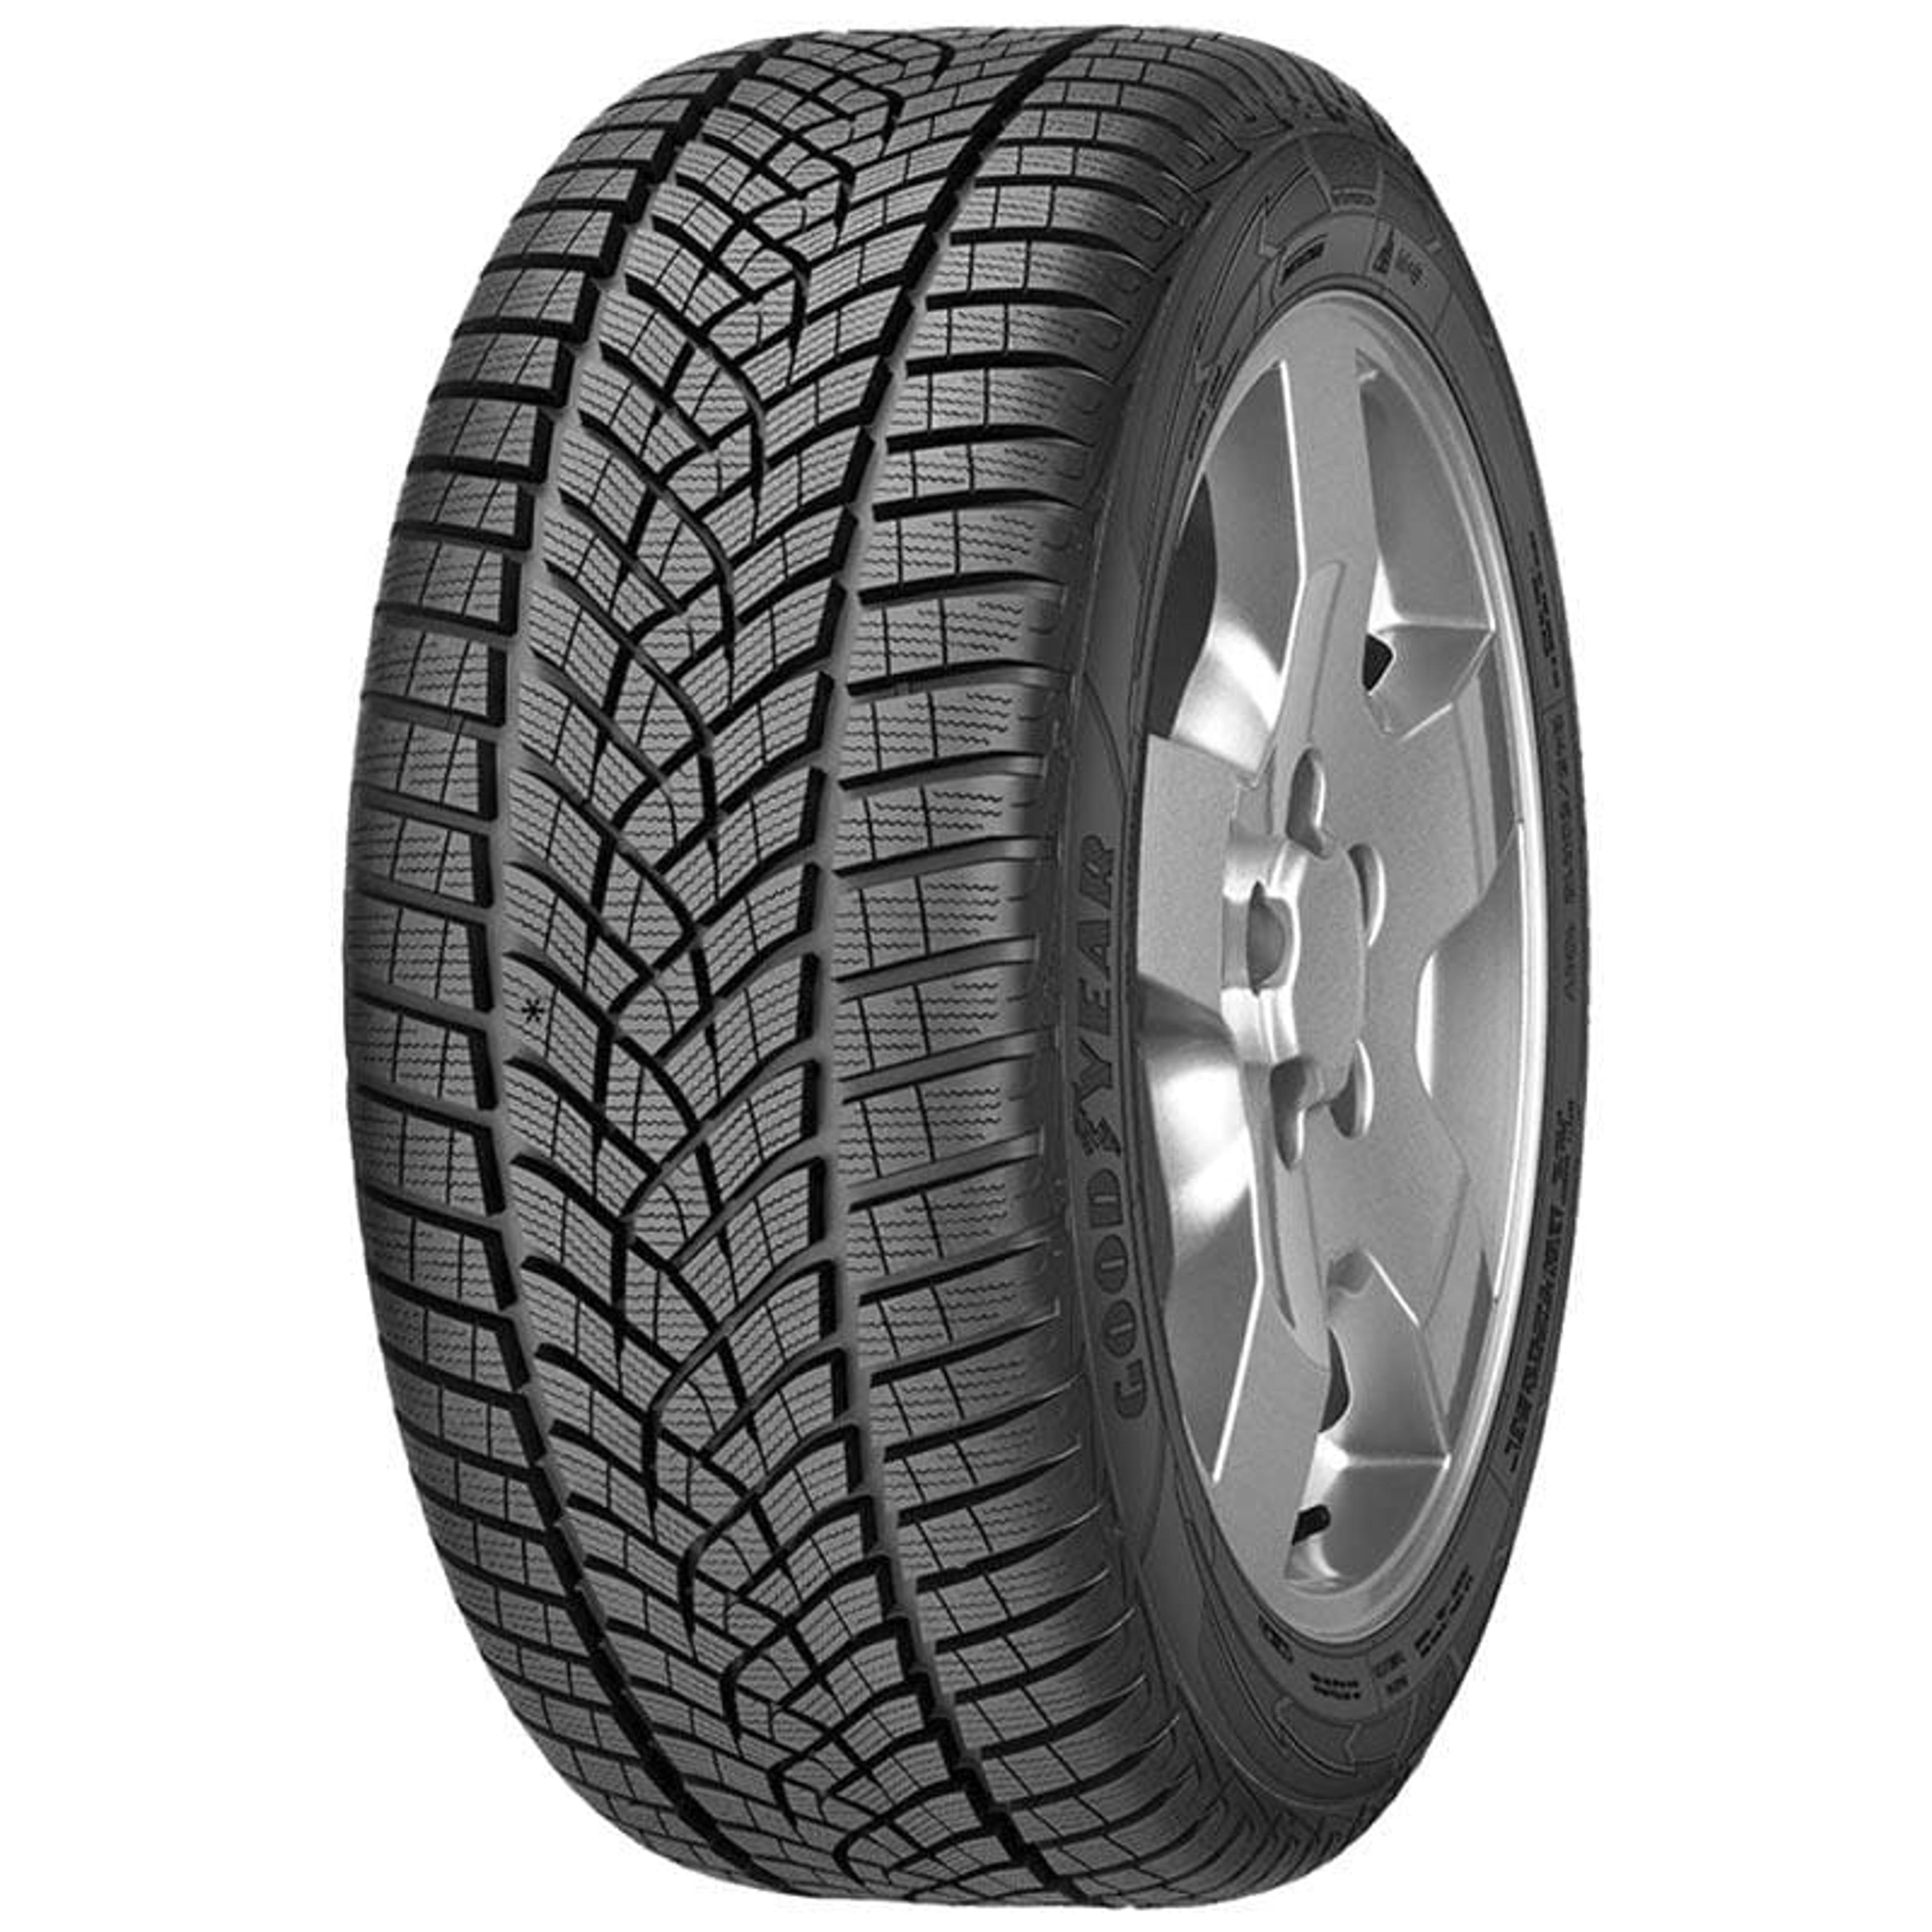 Plus Grip Ultra SimpleTire Buy Goodyear | Tires Performance Online